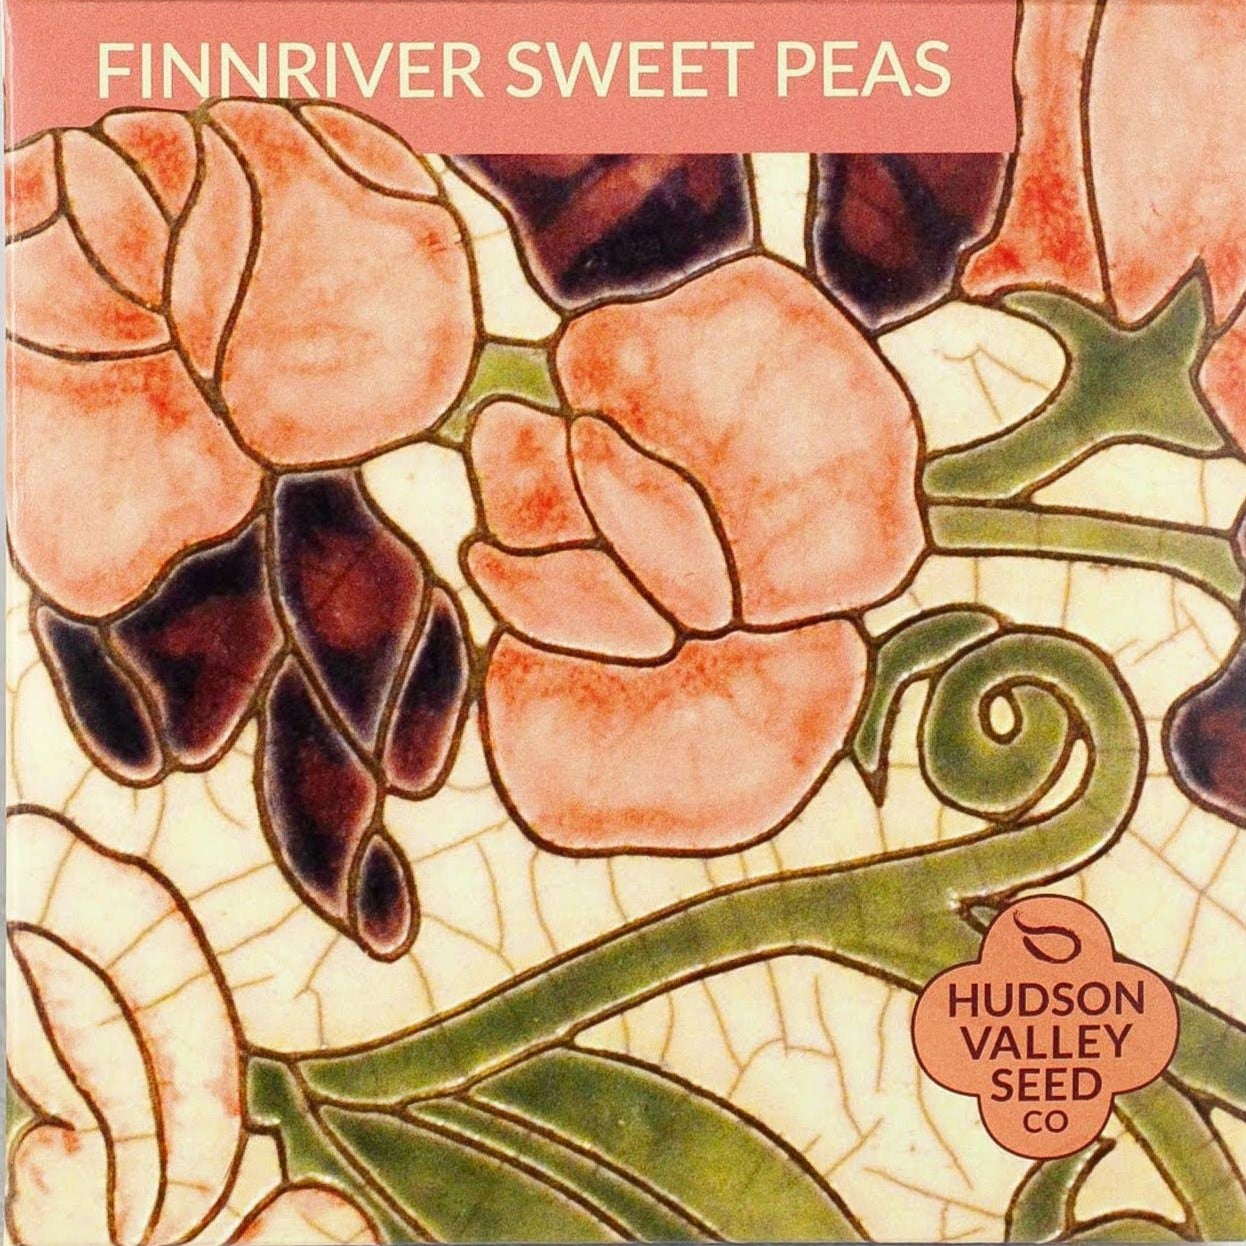 hudson valley seed company finnriver sweet peas